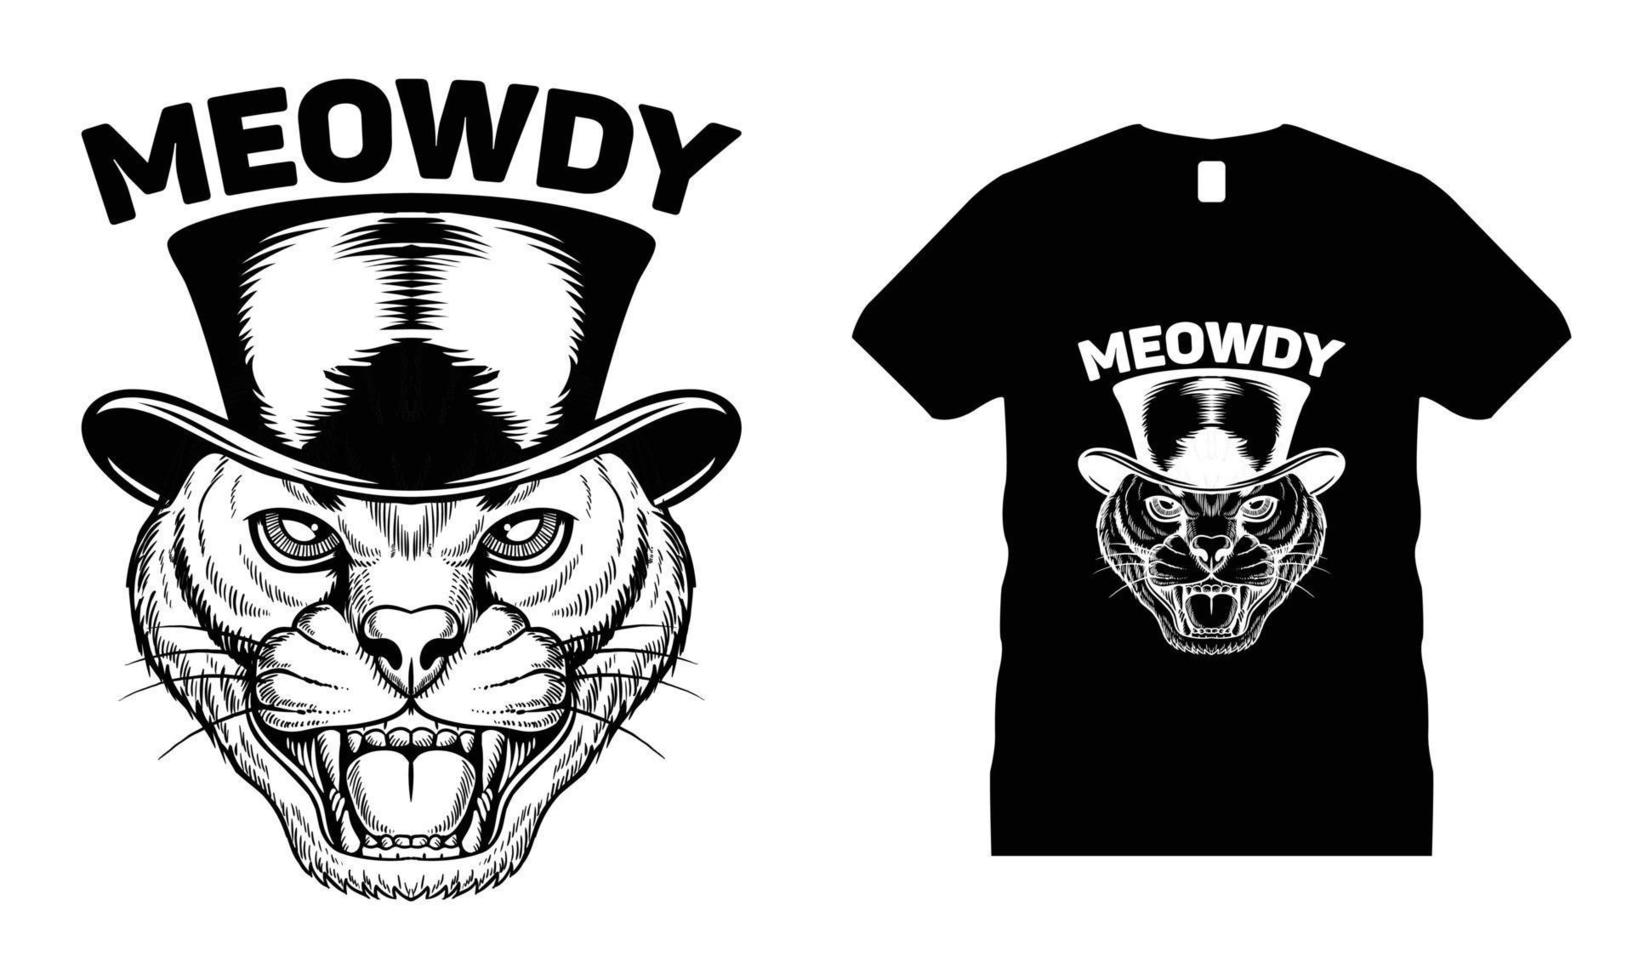 Cat Animal Pets Motivational T-shirt Design vector. Use for T-Shirt, mugs, stickers, etc. vector